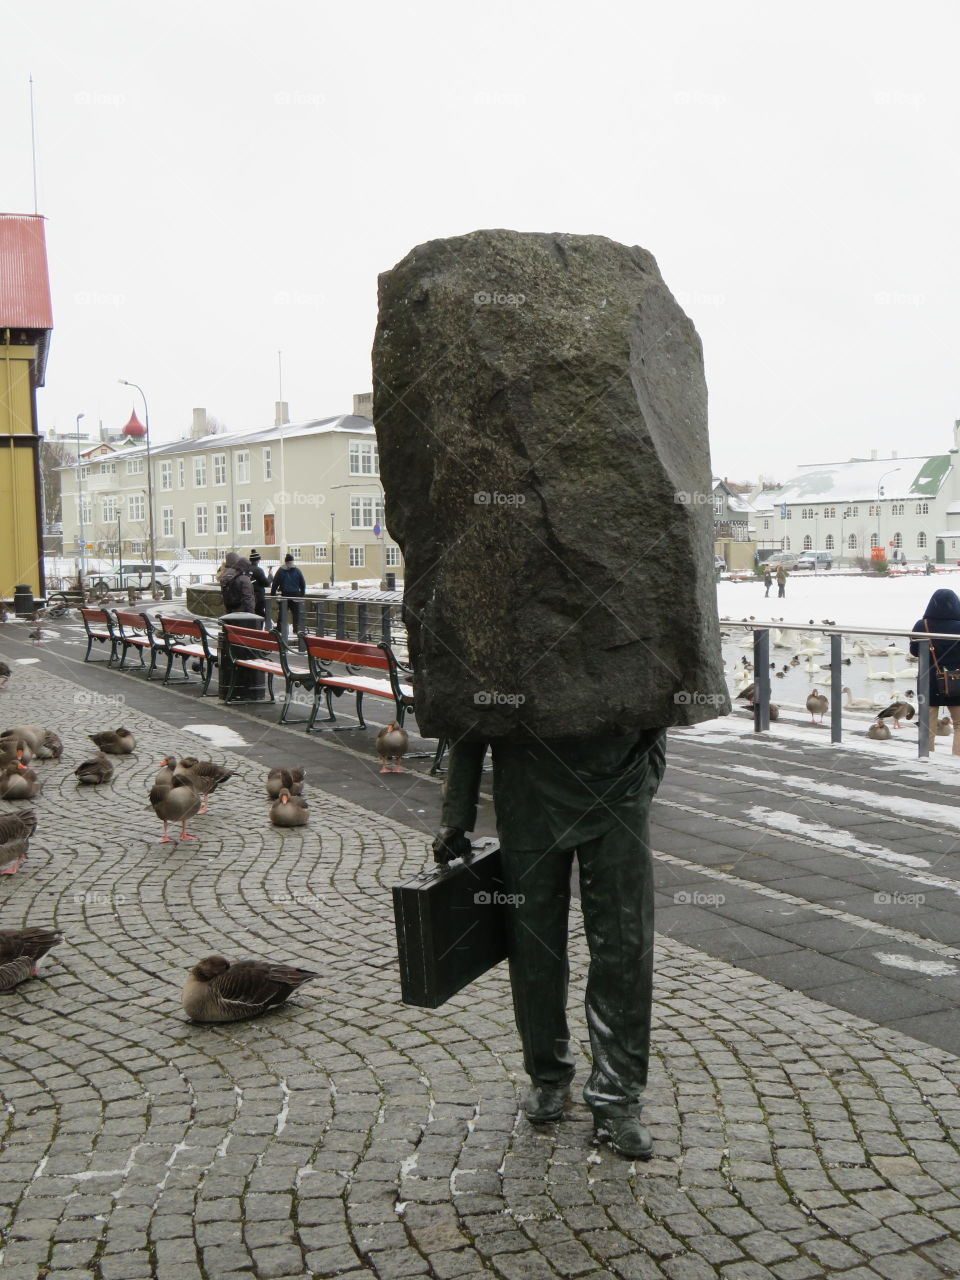 Unknown Bureaucrat statue in Iceland